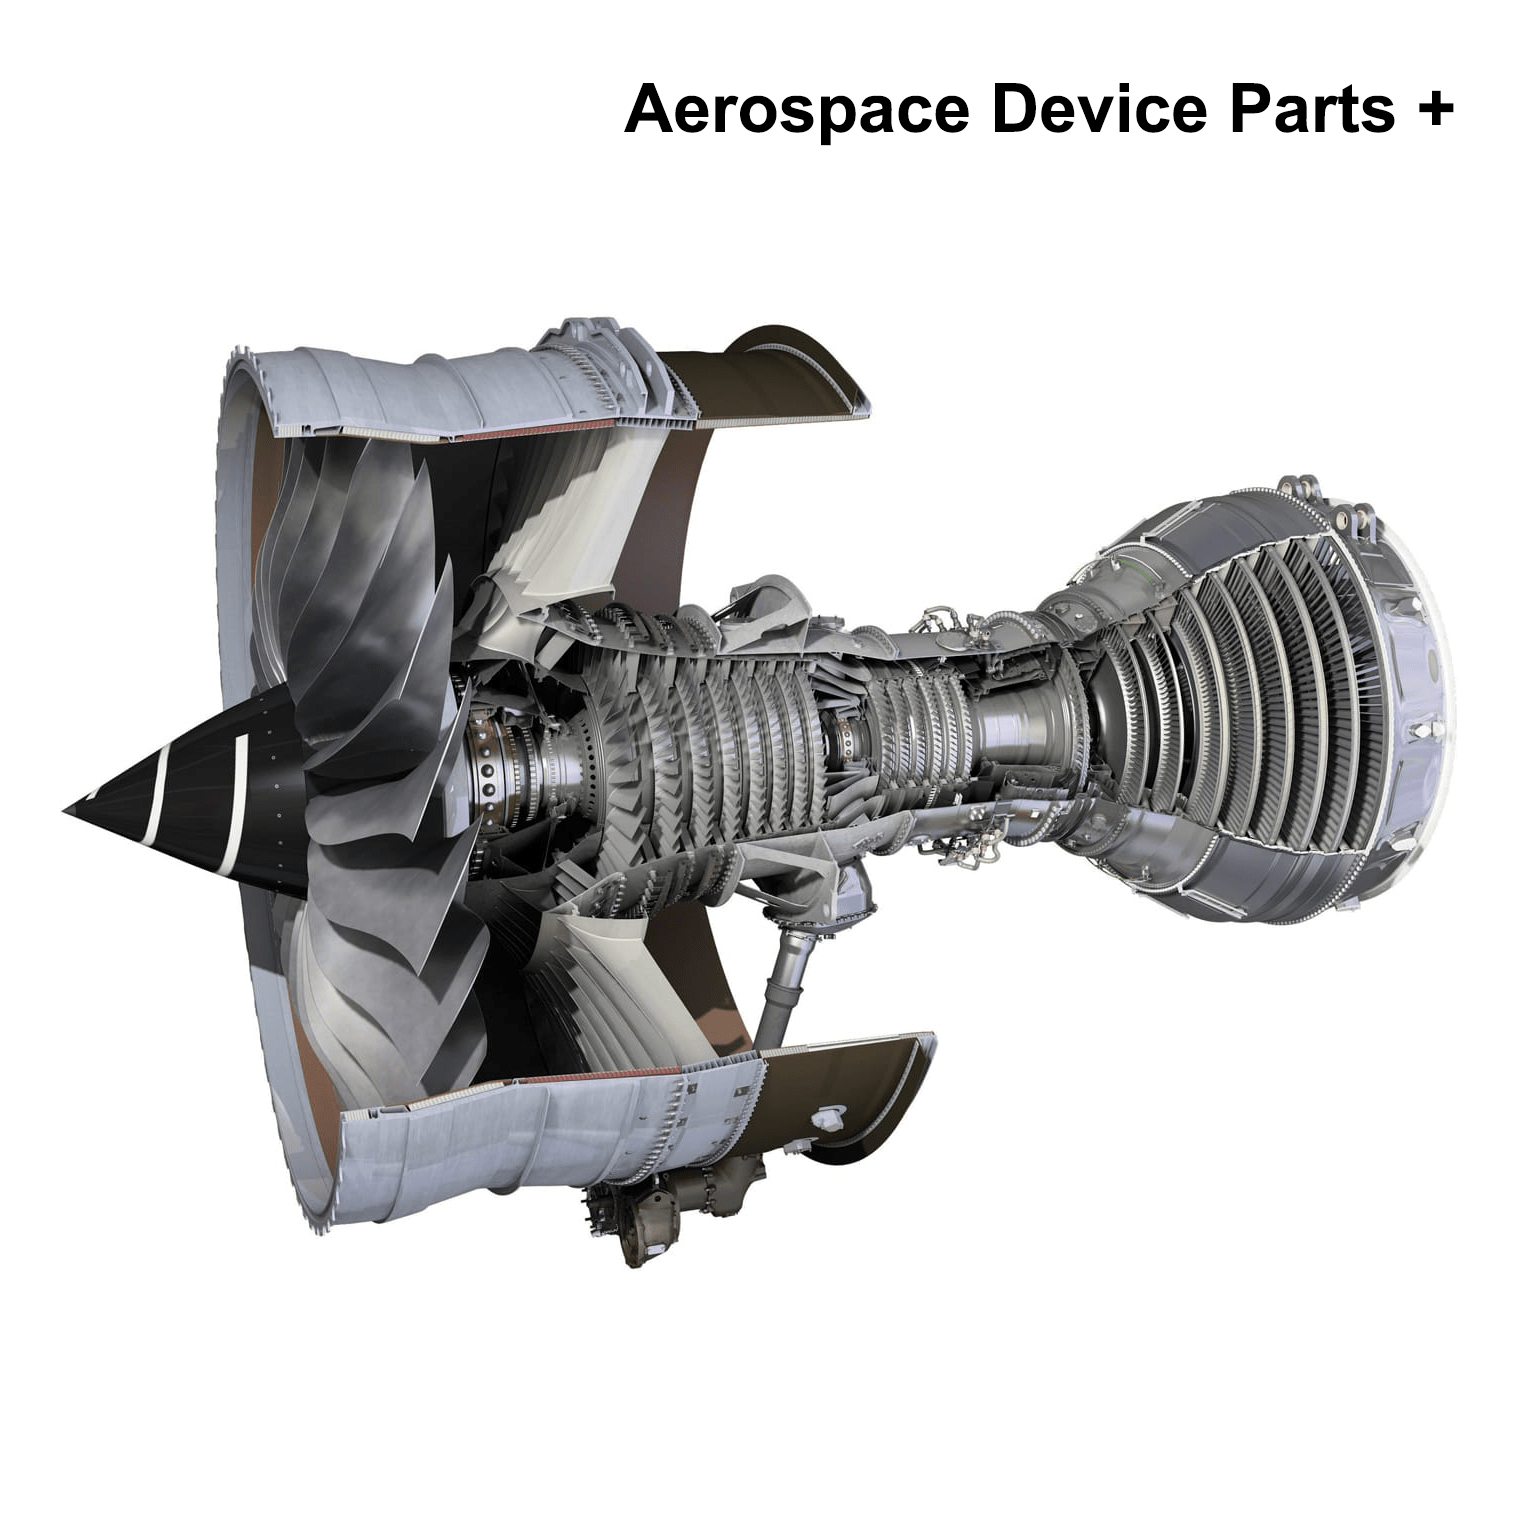 aerospace device parts